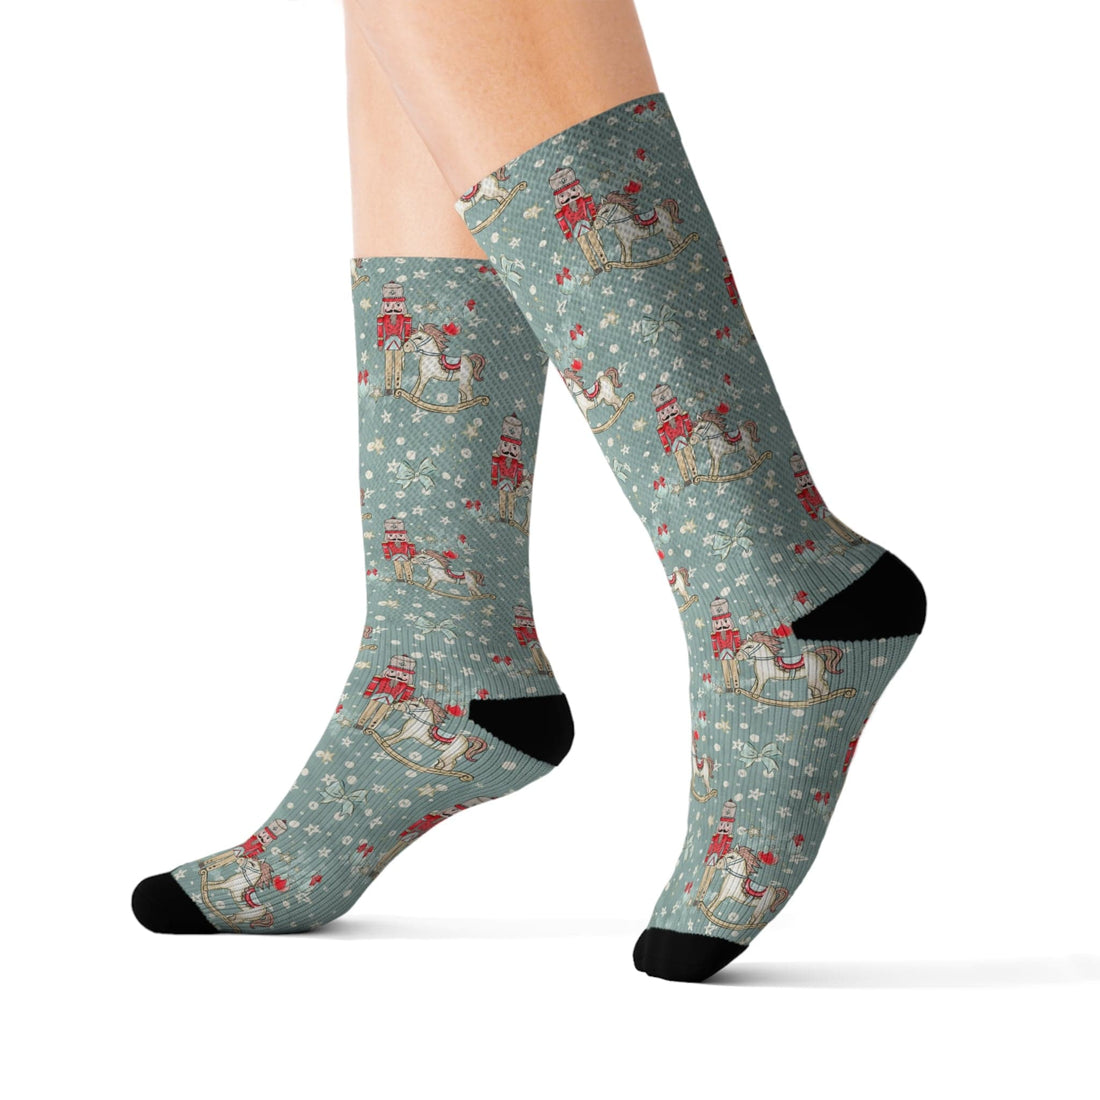 Kate McEnroe New York Festive Nutcracker Christmas Socks: Cozy Crew Length with Fleece Lining - Perfect for Men and Women, Holiday Gifts, Stocking StuffersSocks80313761396996542562